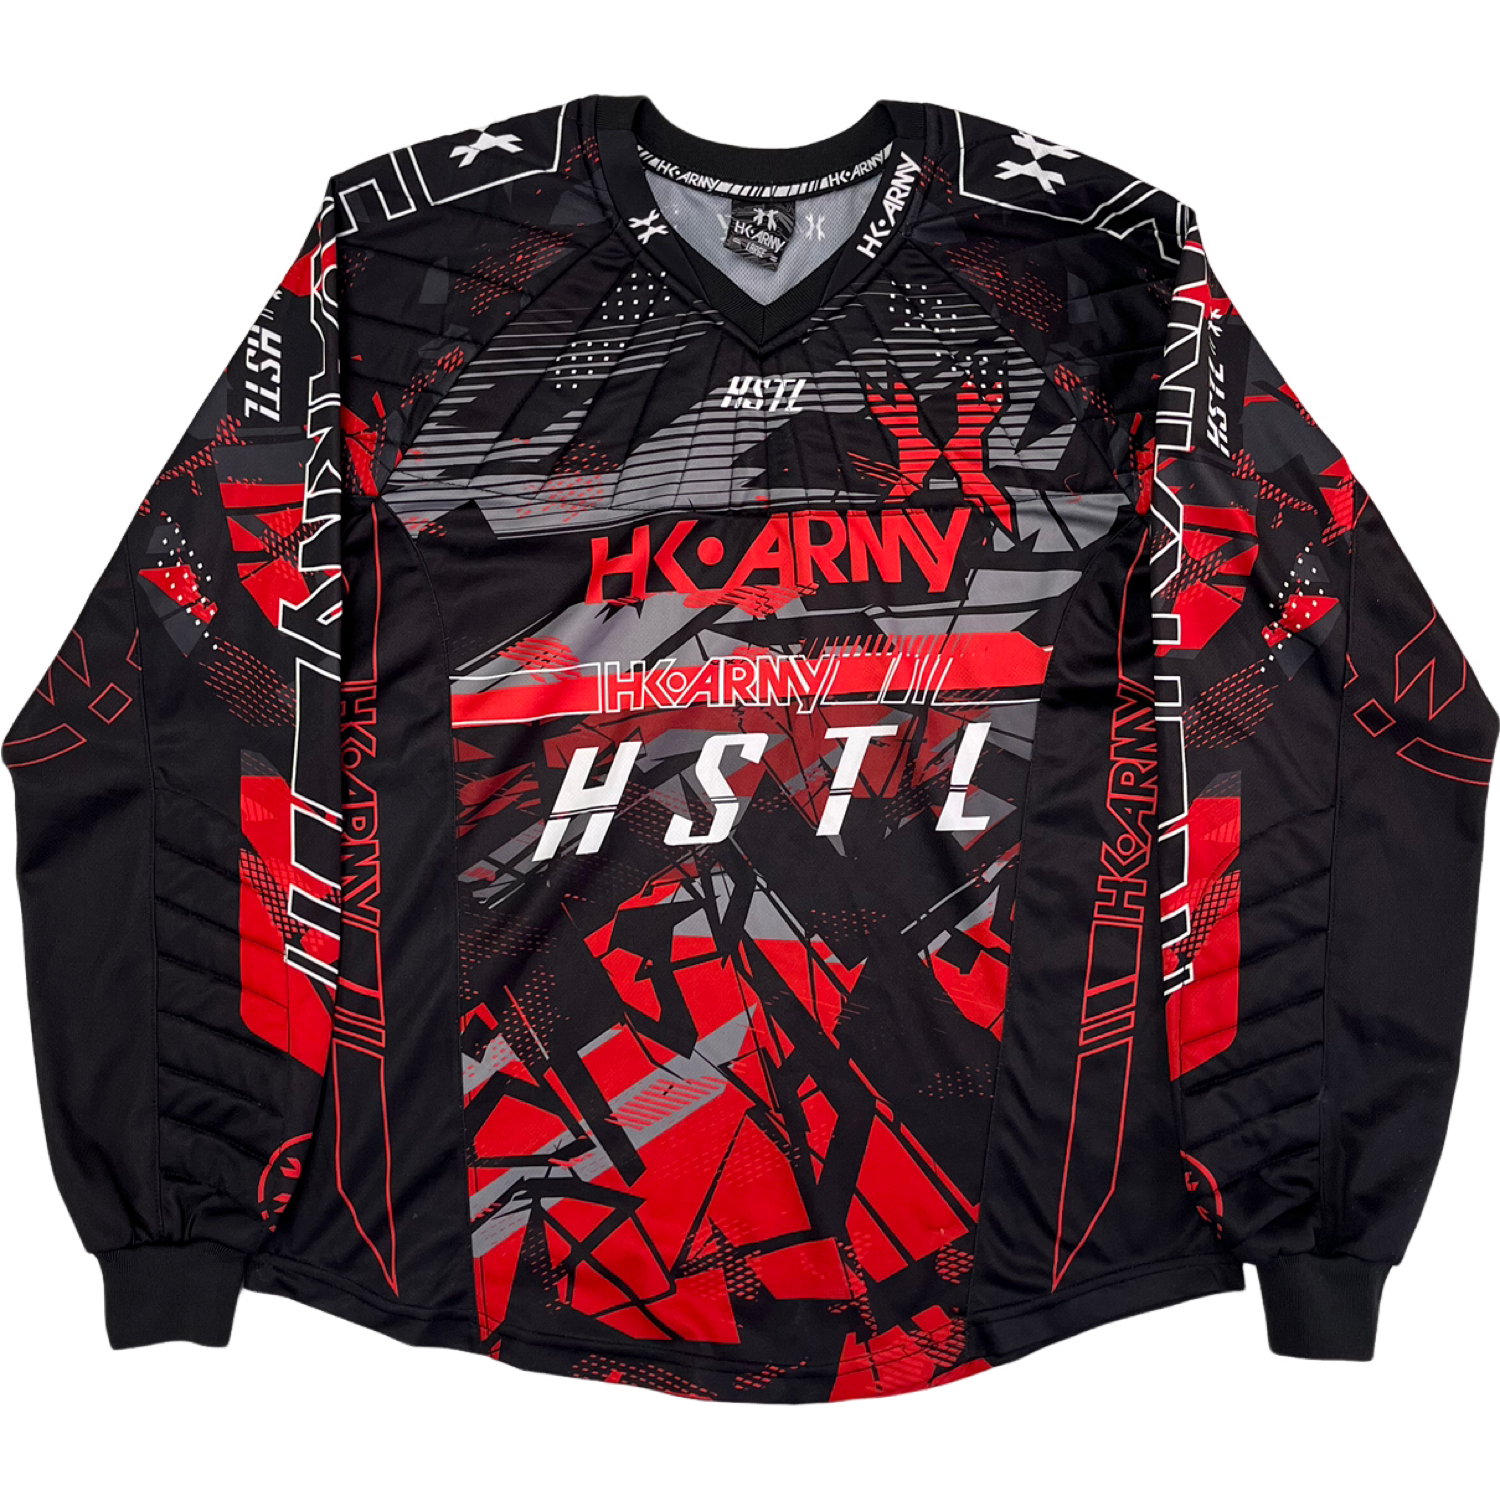 HK Army HSTL Jersey - Black/Grey/Red